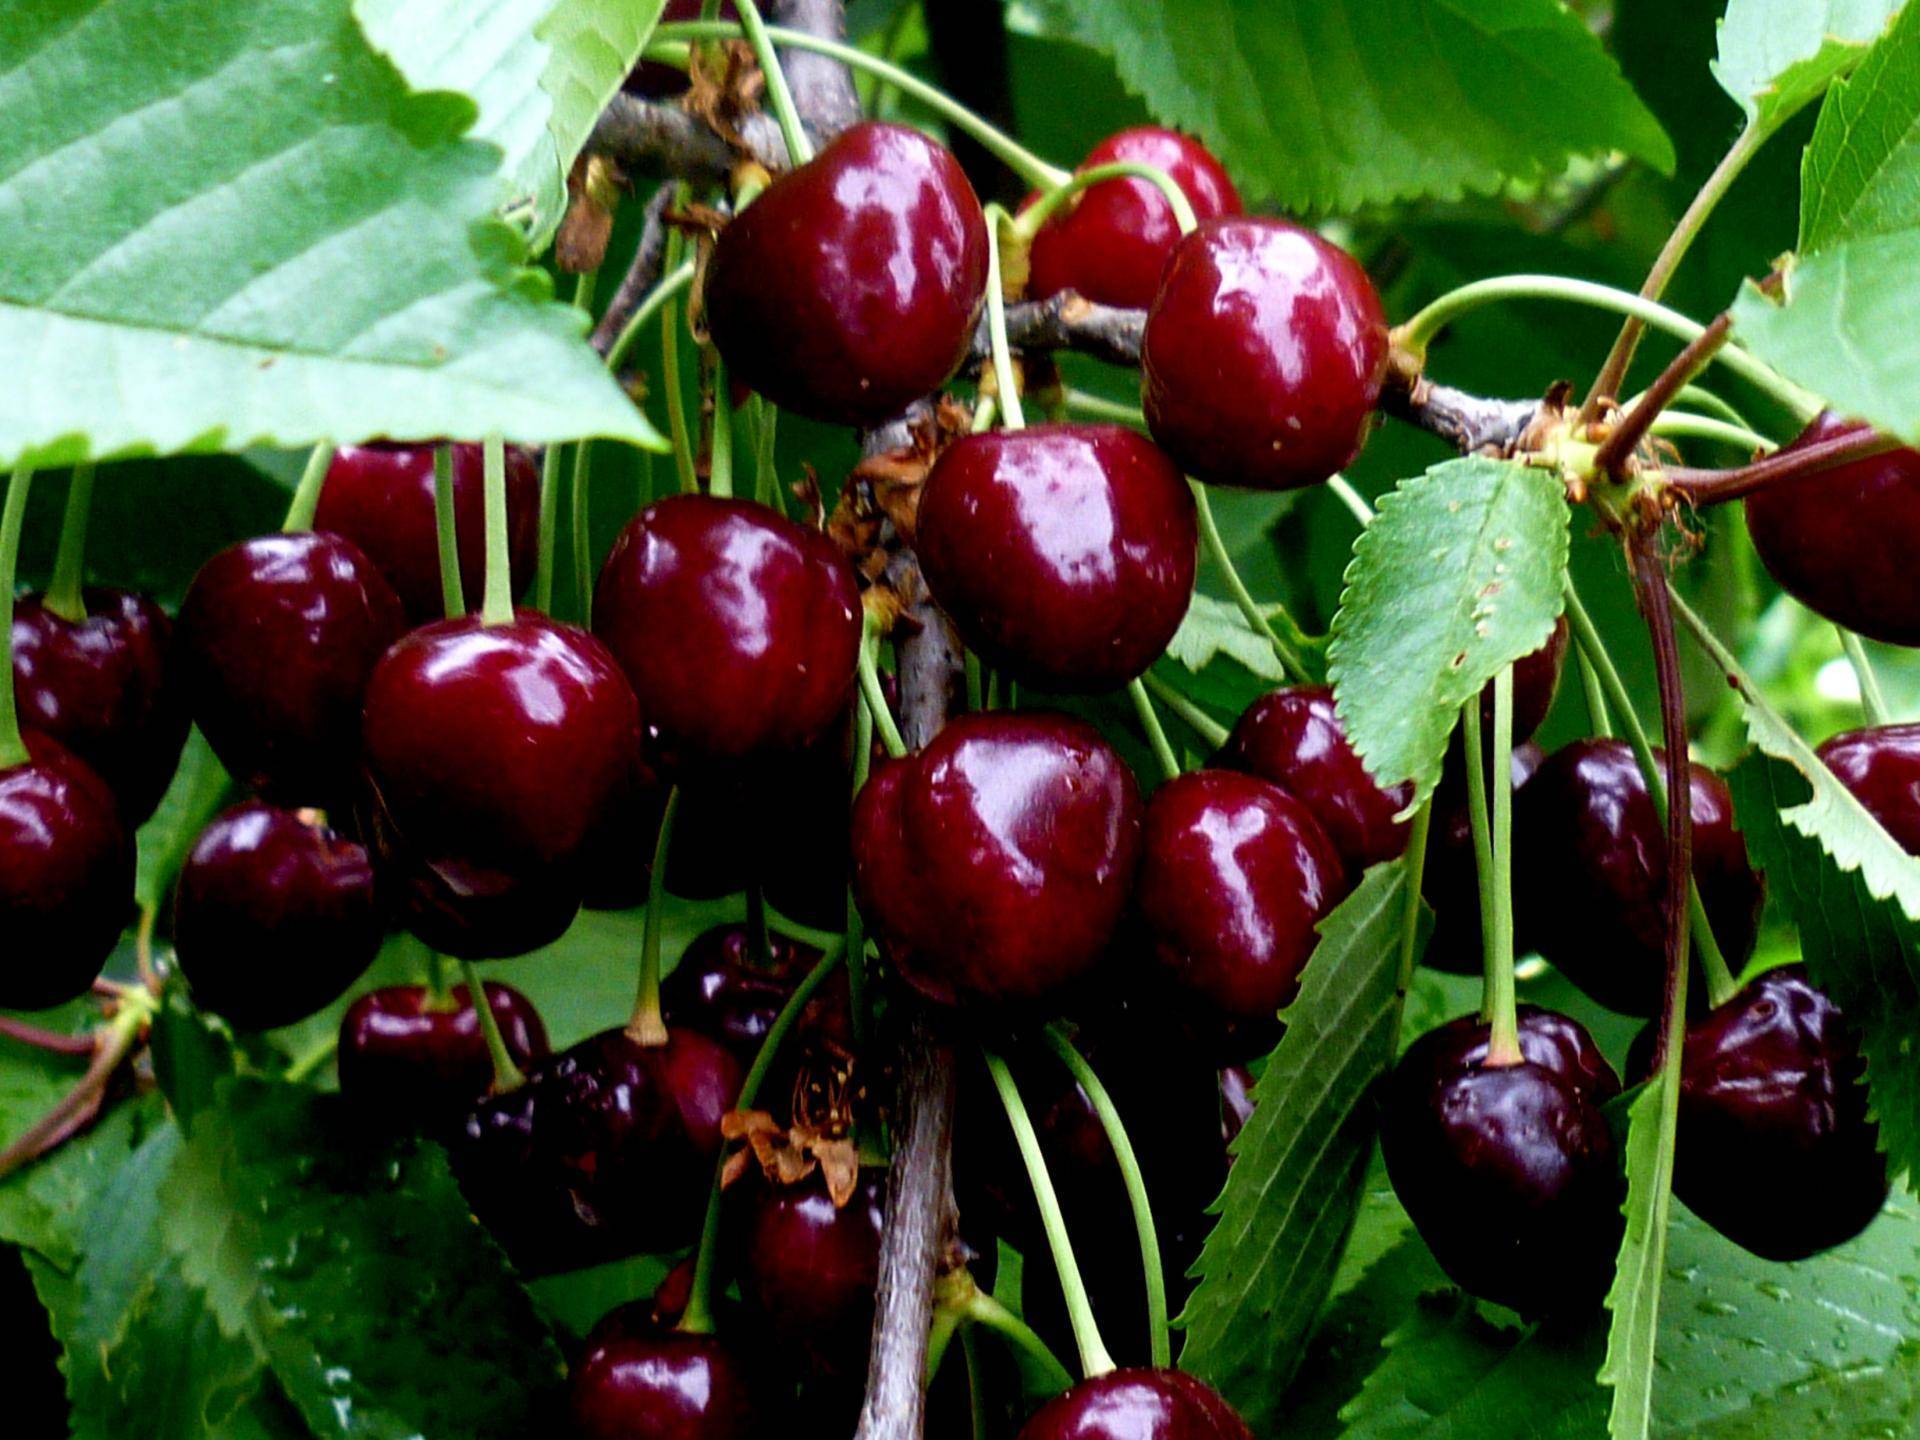 Сорт вишни шоколадница - описание, посадка и уход, опылители и вредители, фото